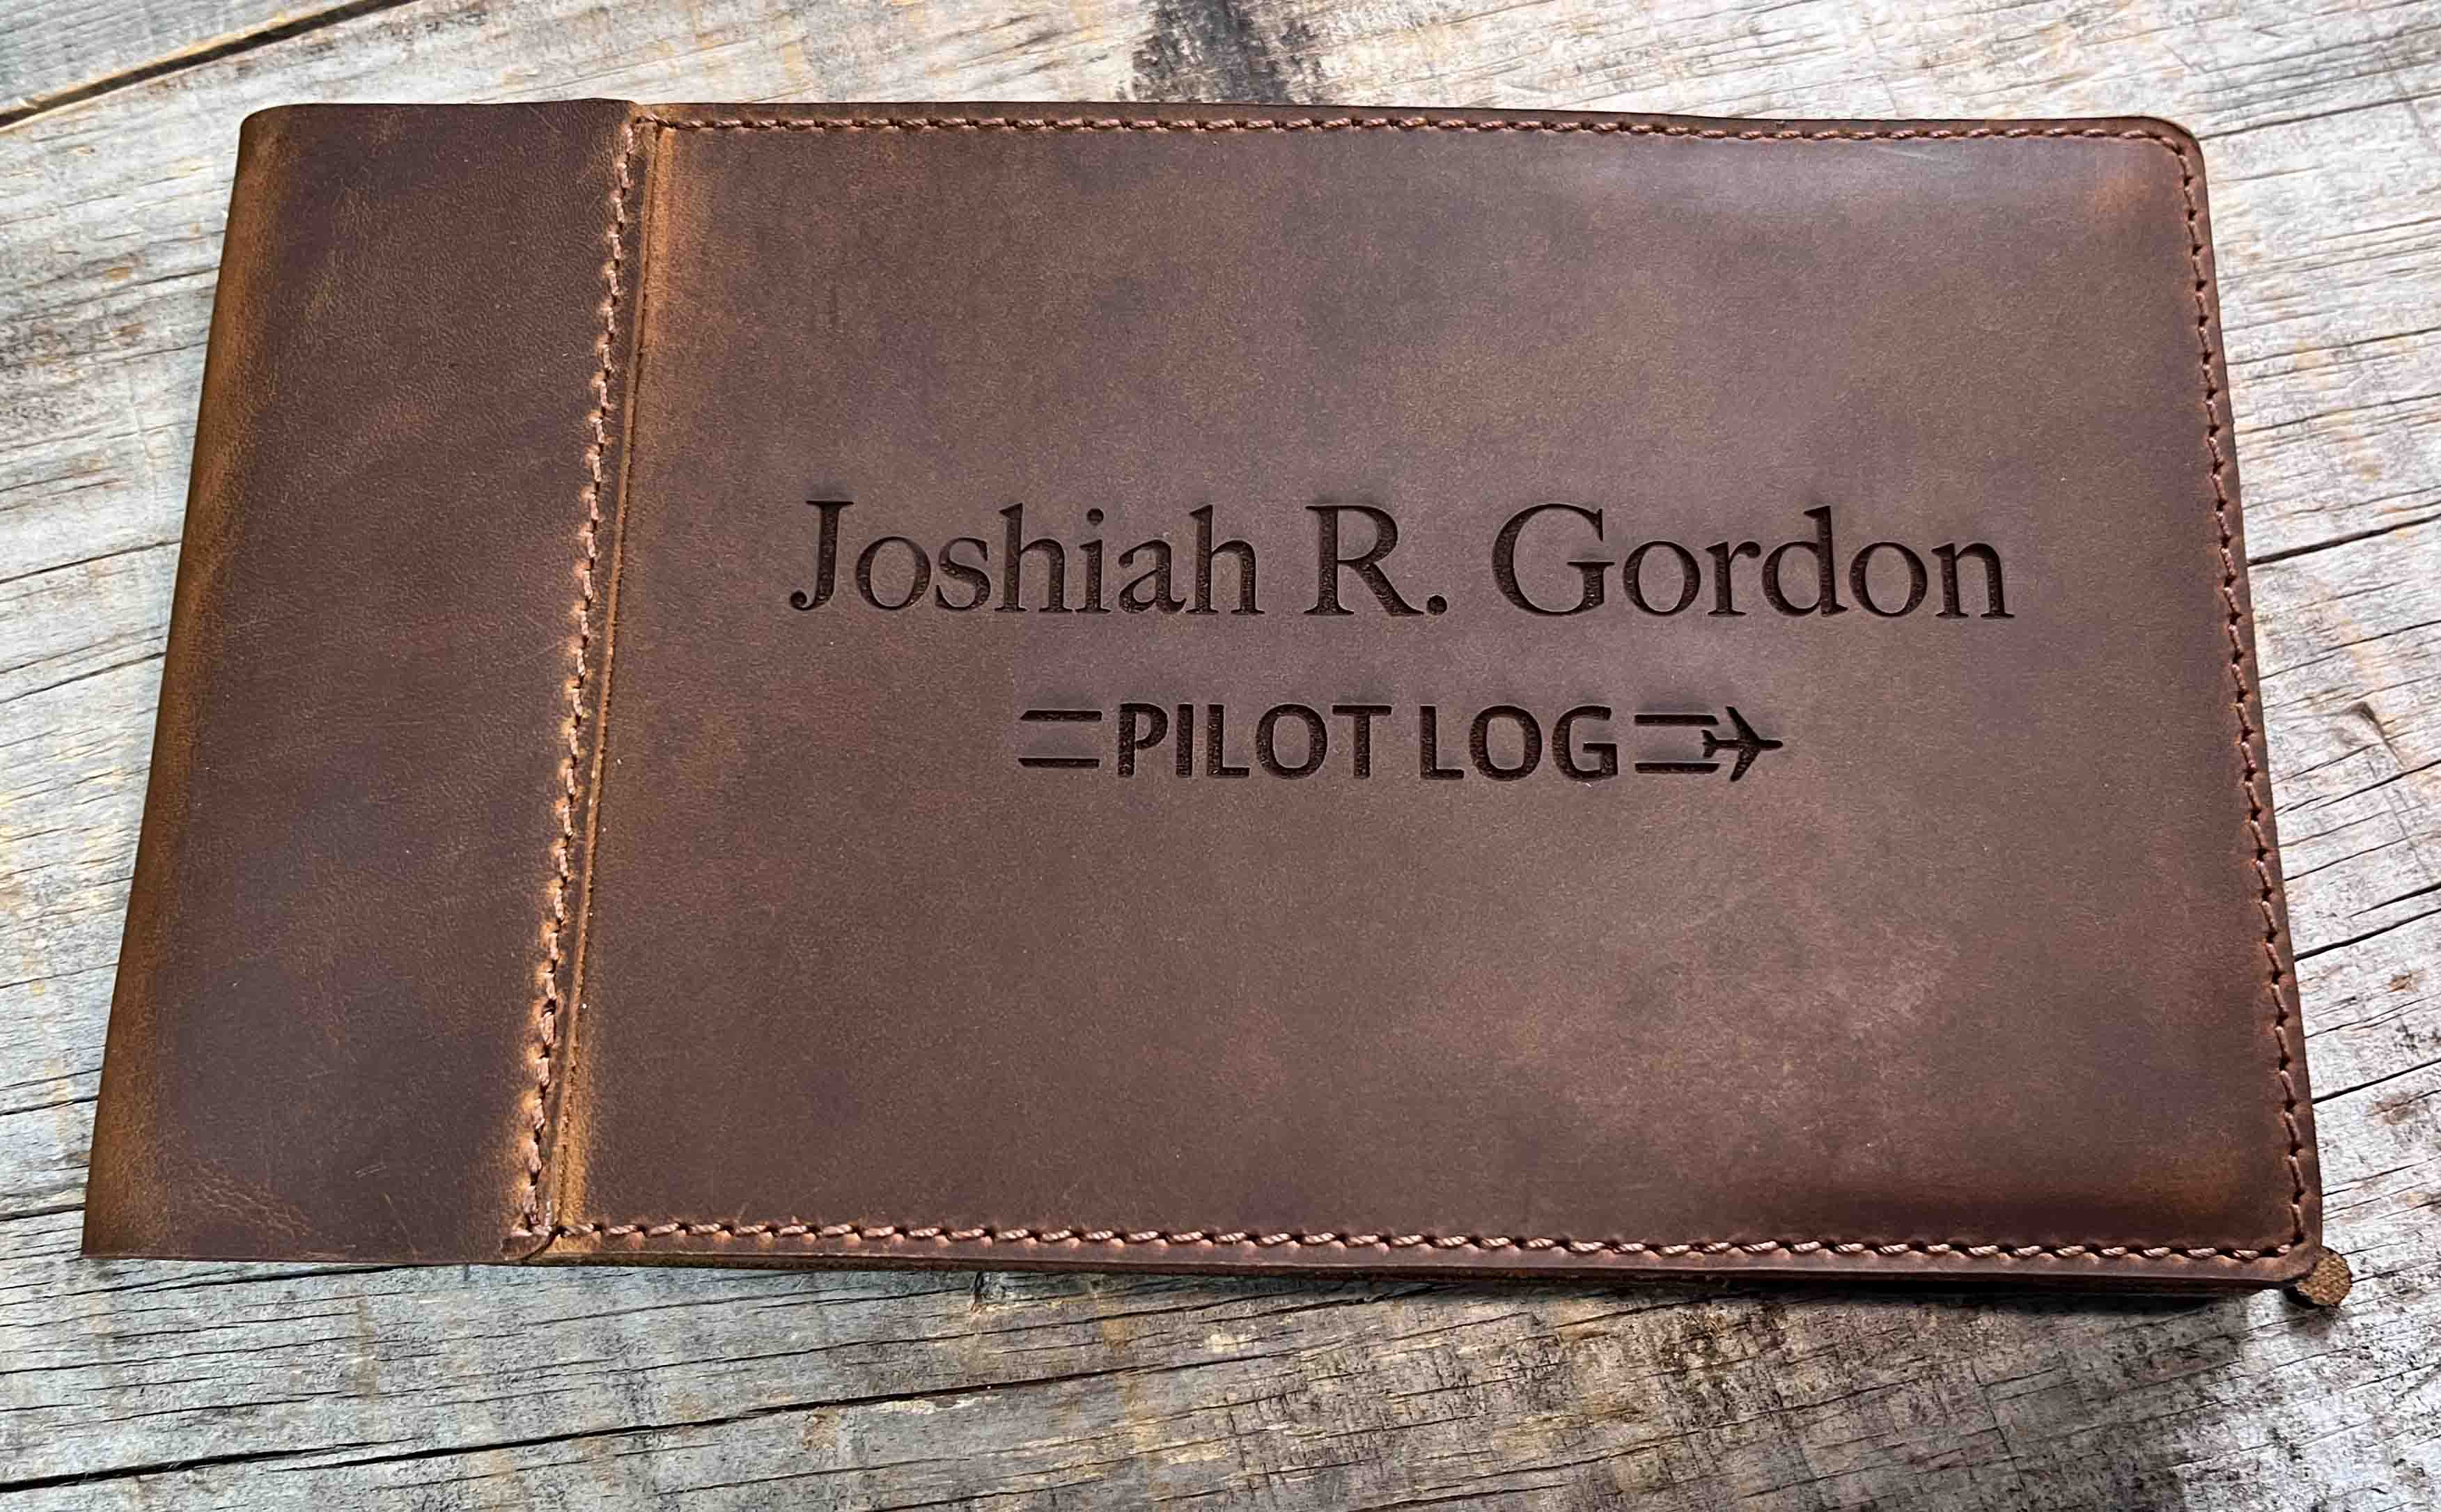 Pilots Log Premium Leather Engraved.